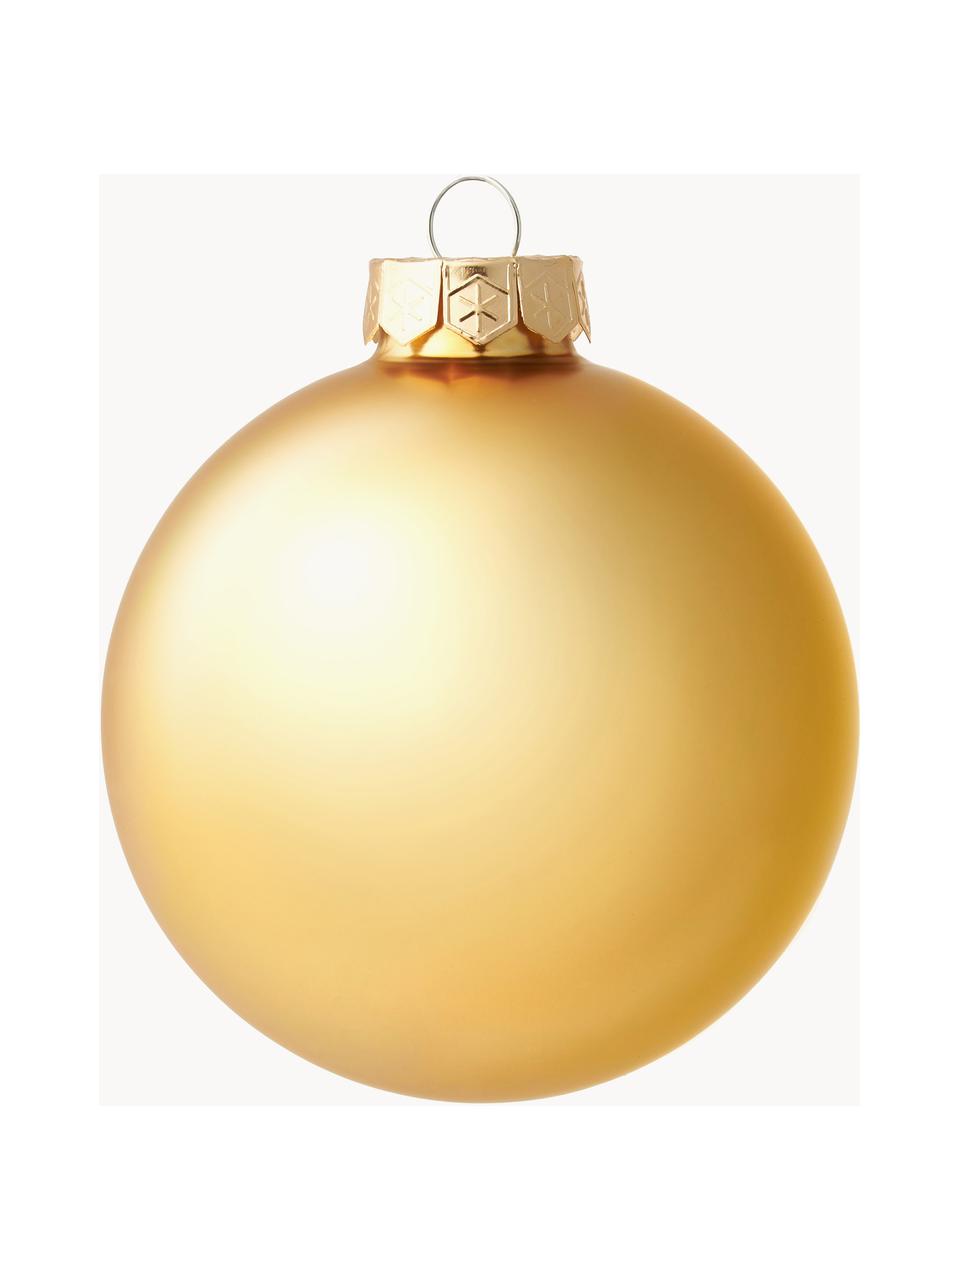 Weihnachtskugeln Evergreen matt/glänzend, verschiedene Größen, Goldfarben, Ø 10 cm, 4 Stück